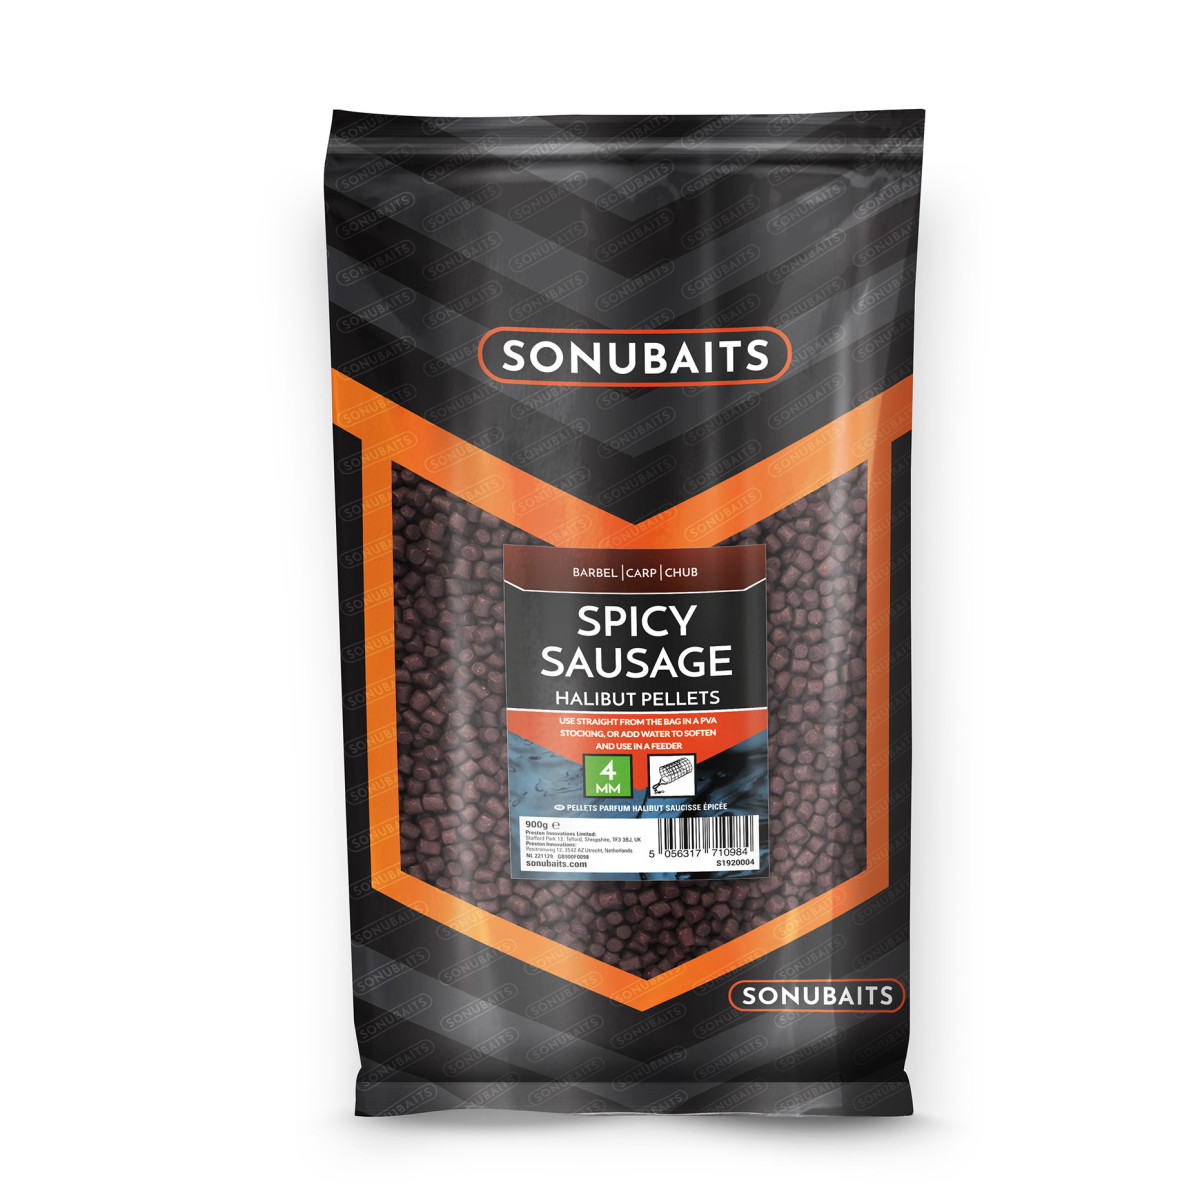 Sonubaits Spicy Sausage Halibut Pellets - 4mm